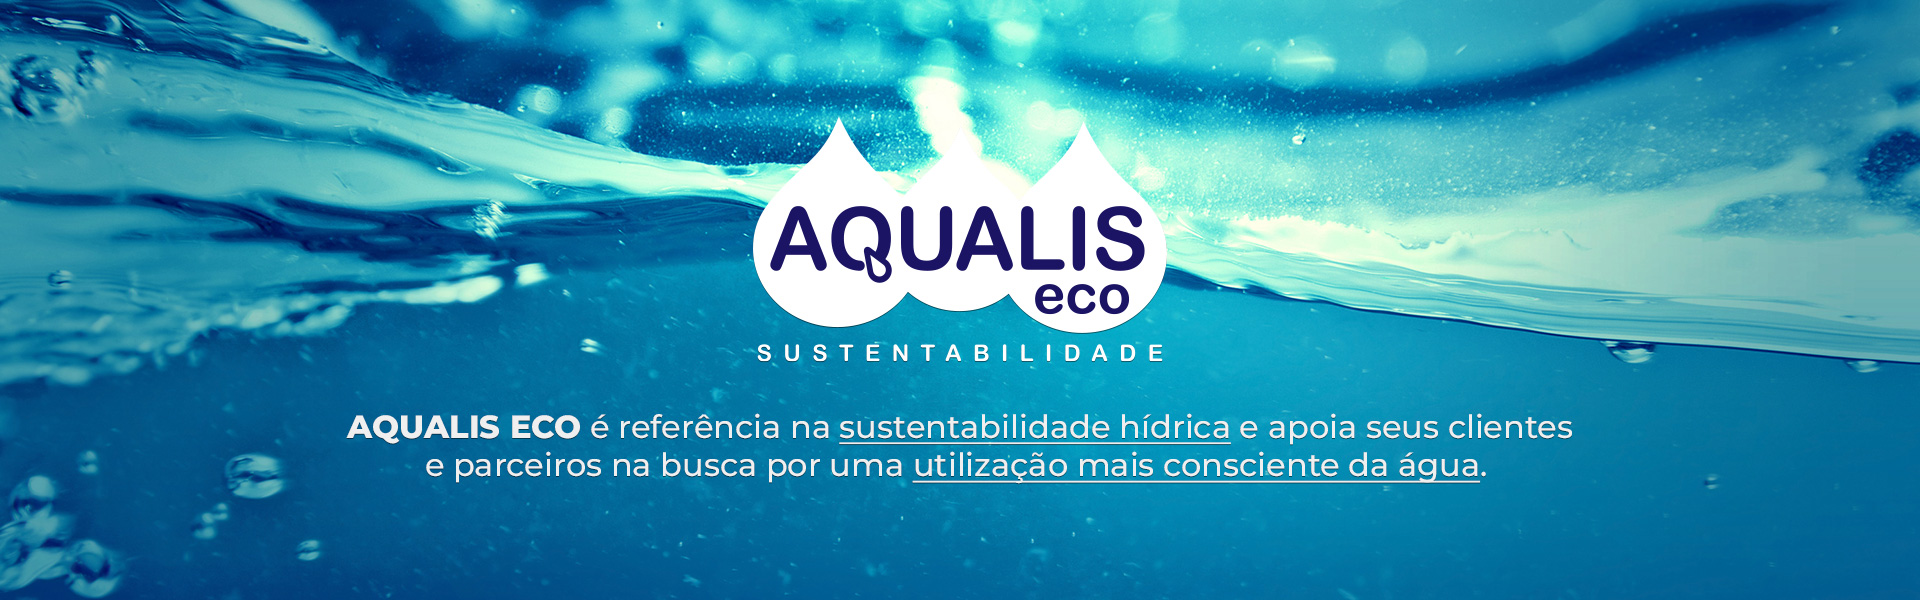 Aqualis Eco